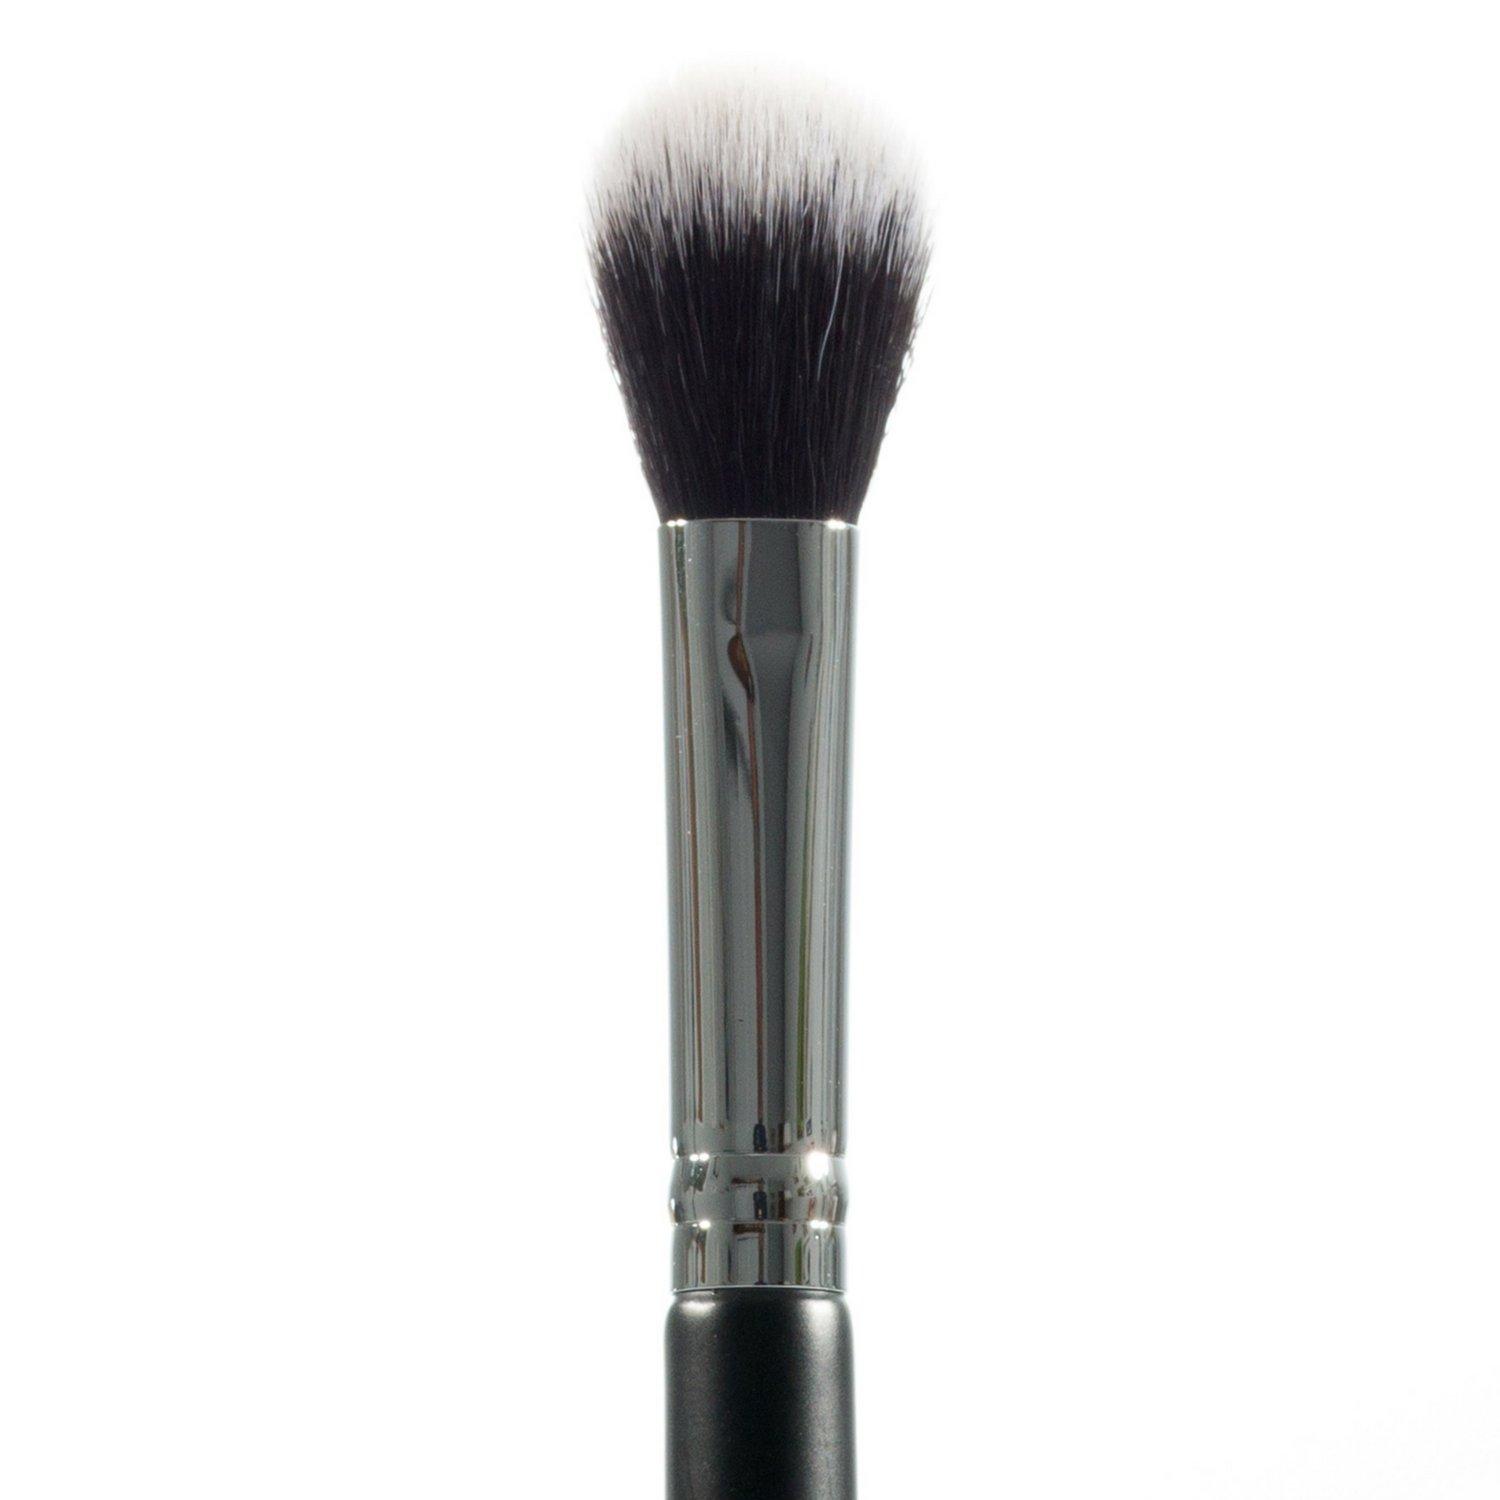 Under Eye Setting Powder Brush - Small Soft Fluffy Tapered Blending Makeup  Brush, Set Concealer, Buffing, Baking, Finishing Loose, Pressed, Compact